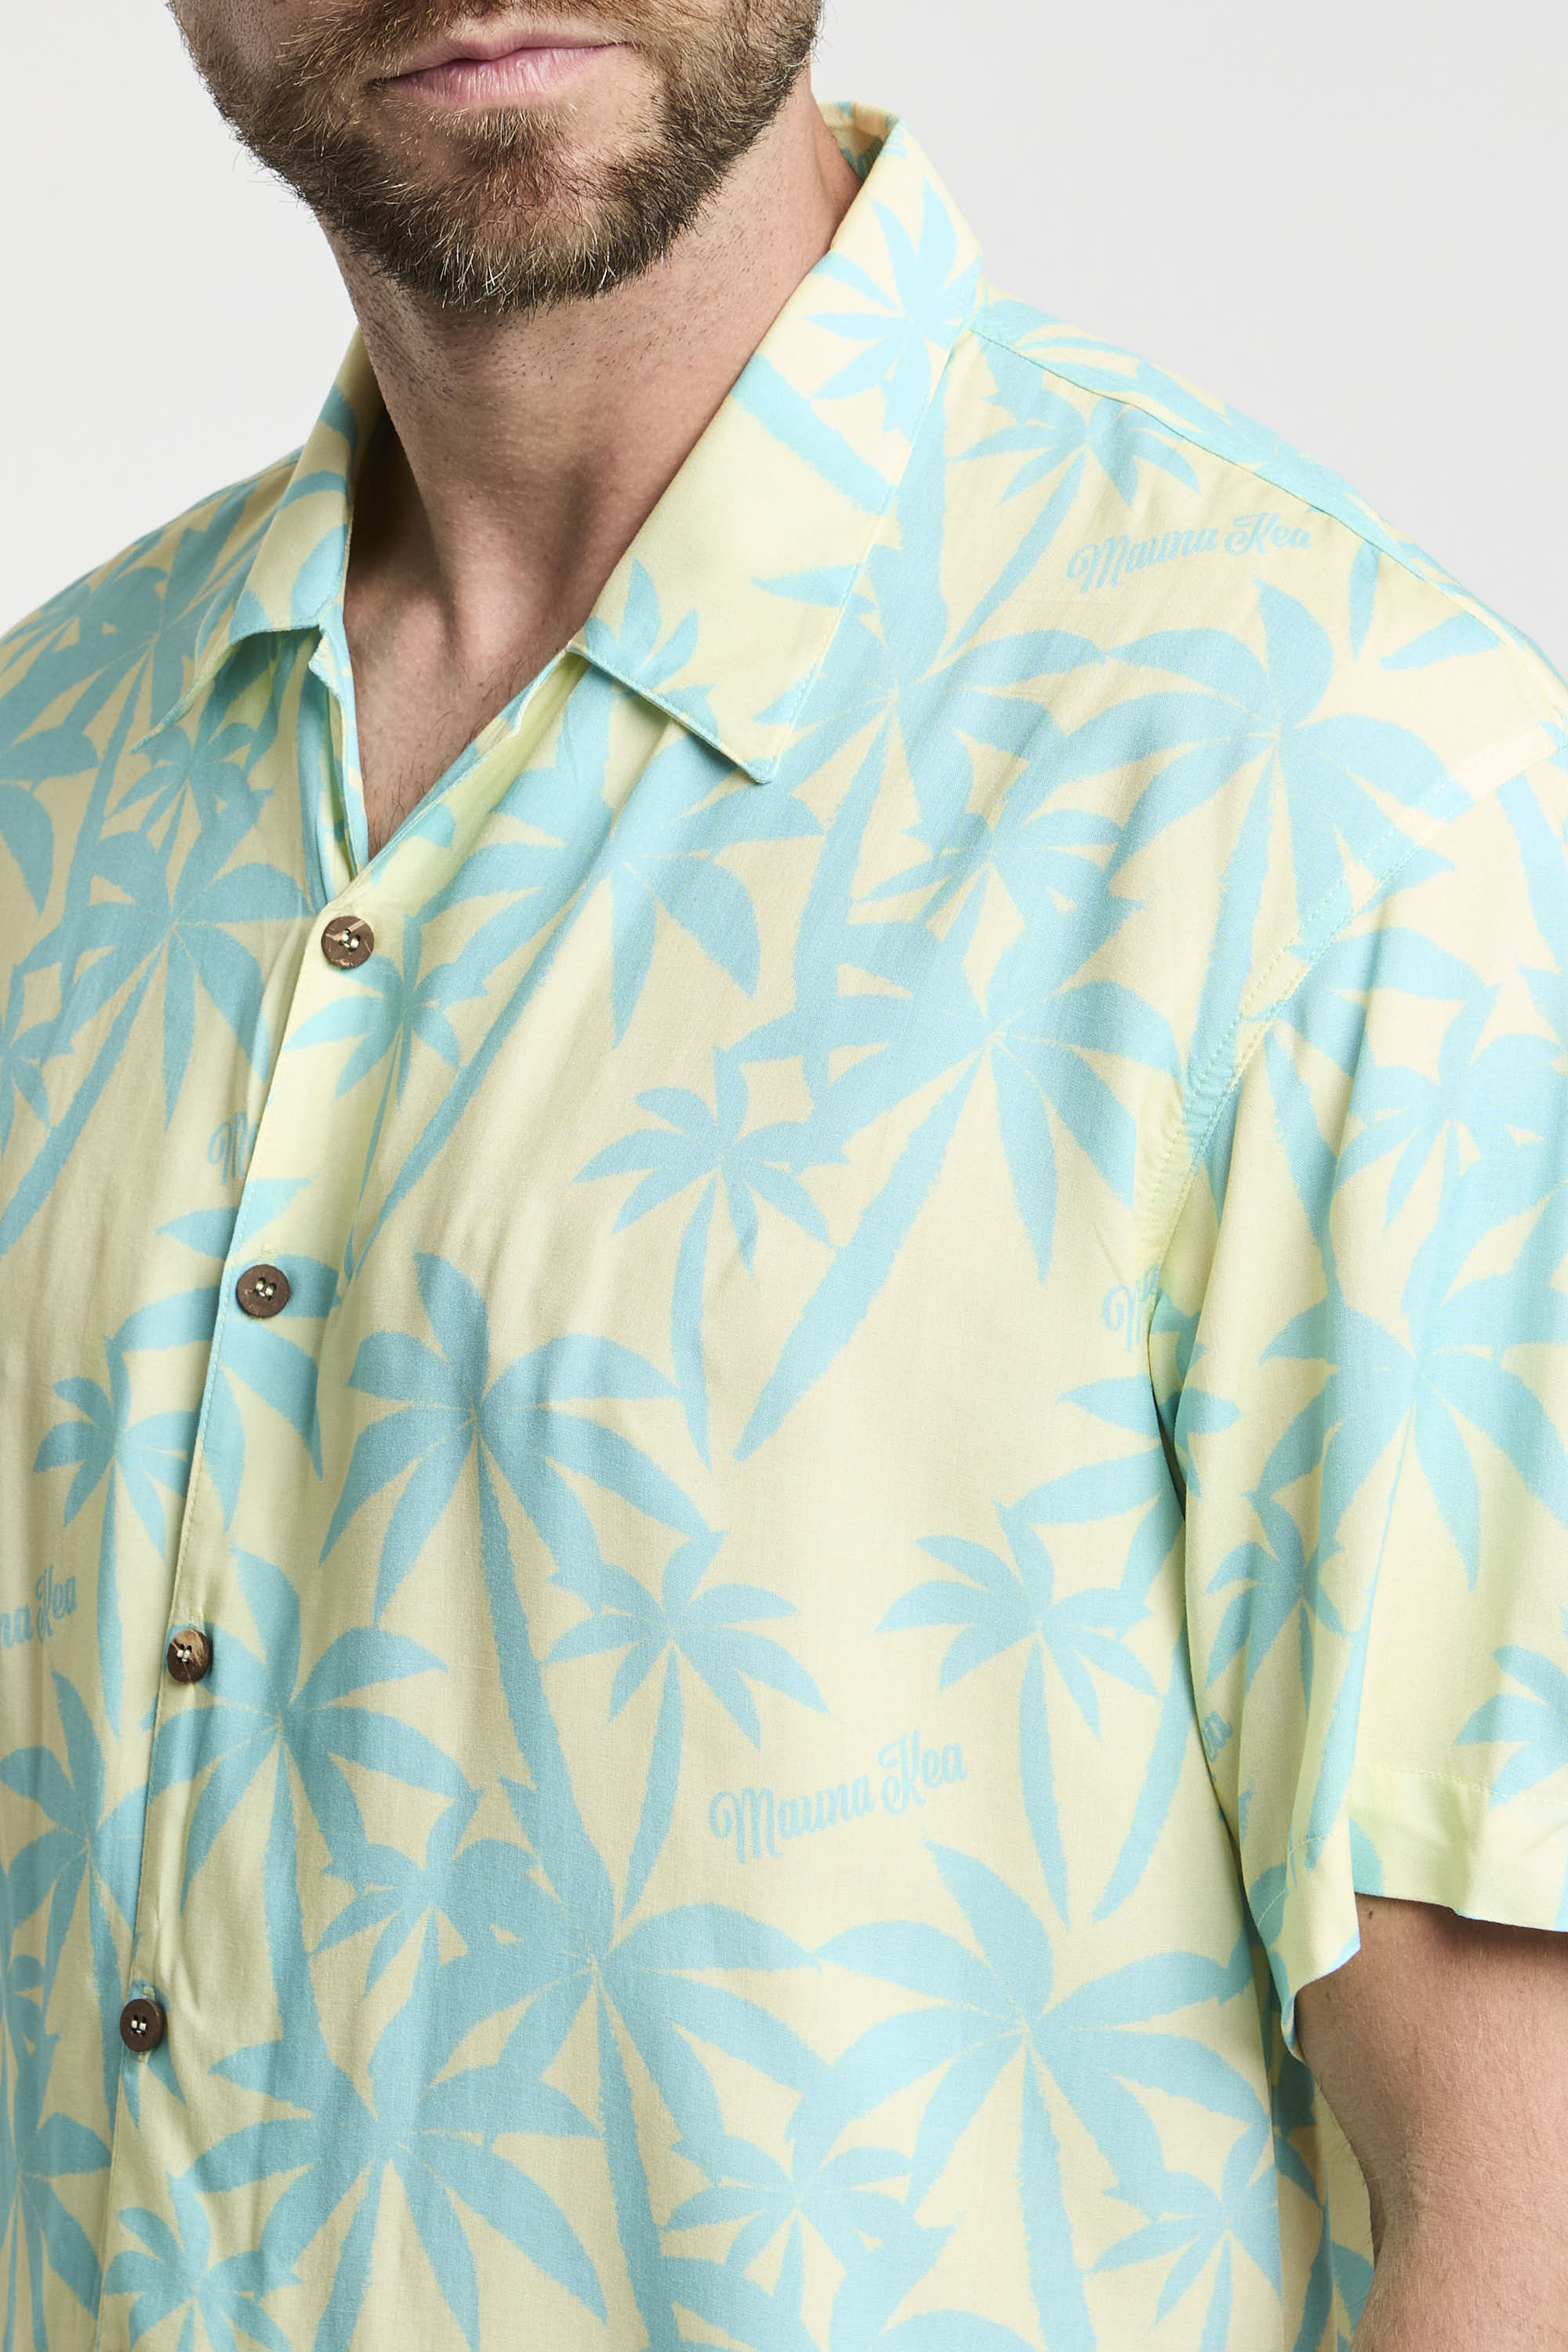 Mauna Kea Printed All Over Viscose Shirt in Yellow-2